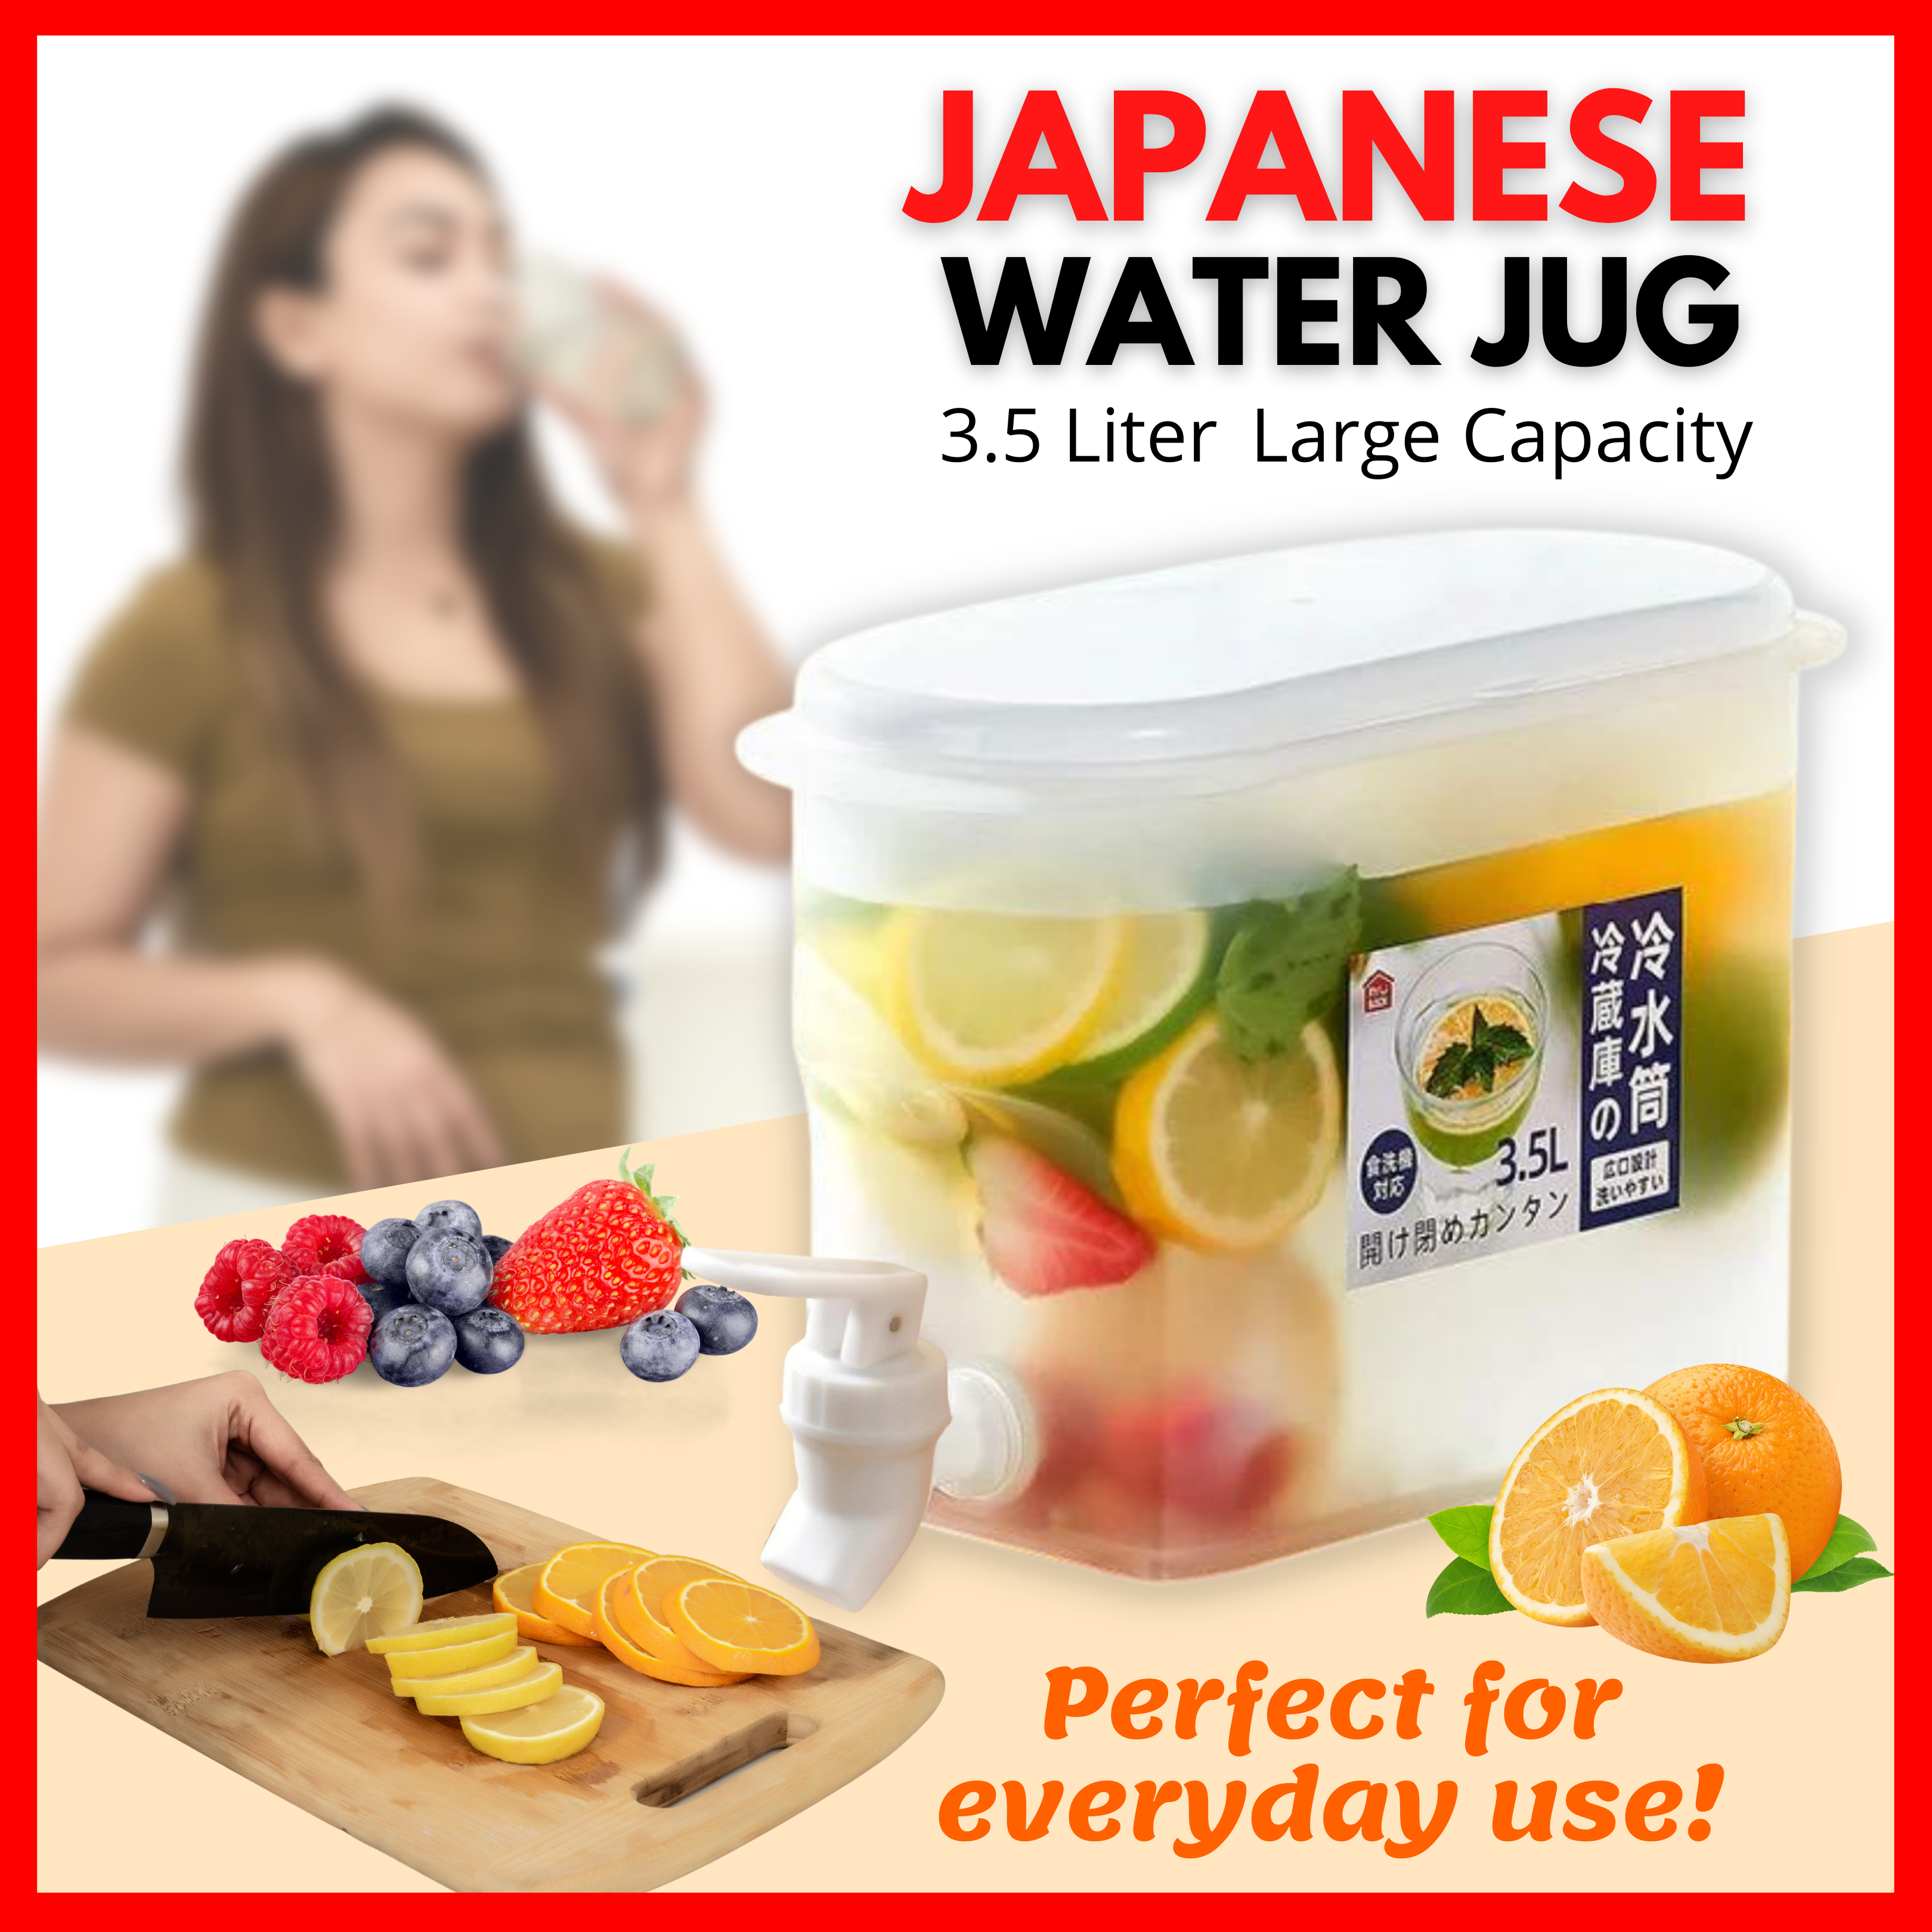 3.5L Japanese Water Jug